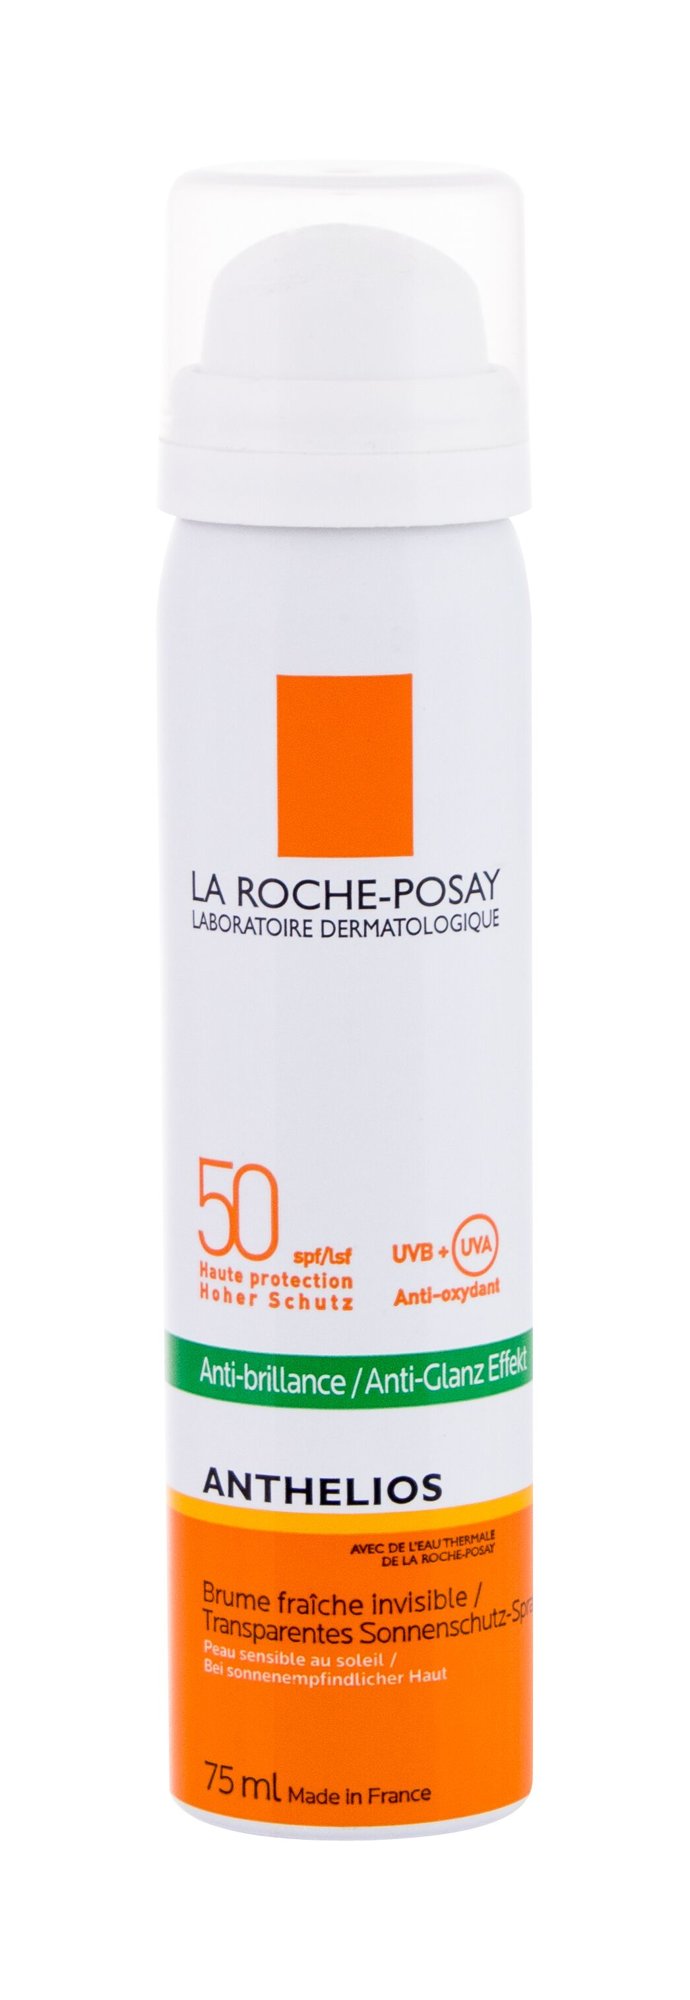 La Roche-Posay Anthelios Anti-Shine veido apsauga